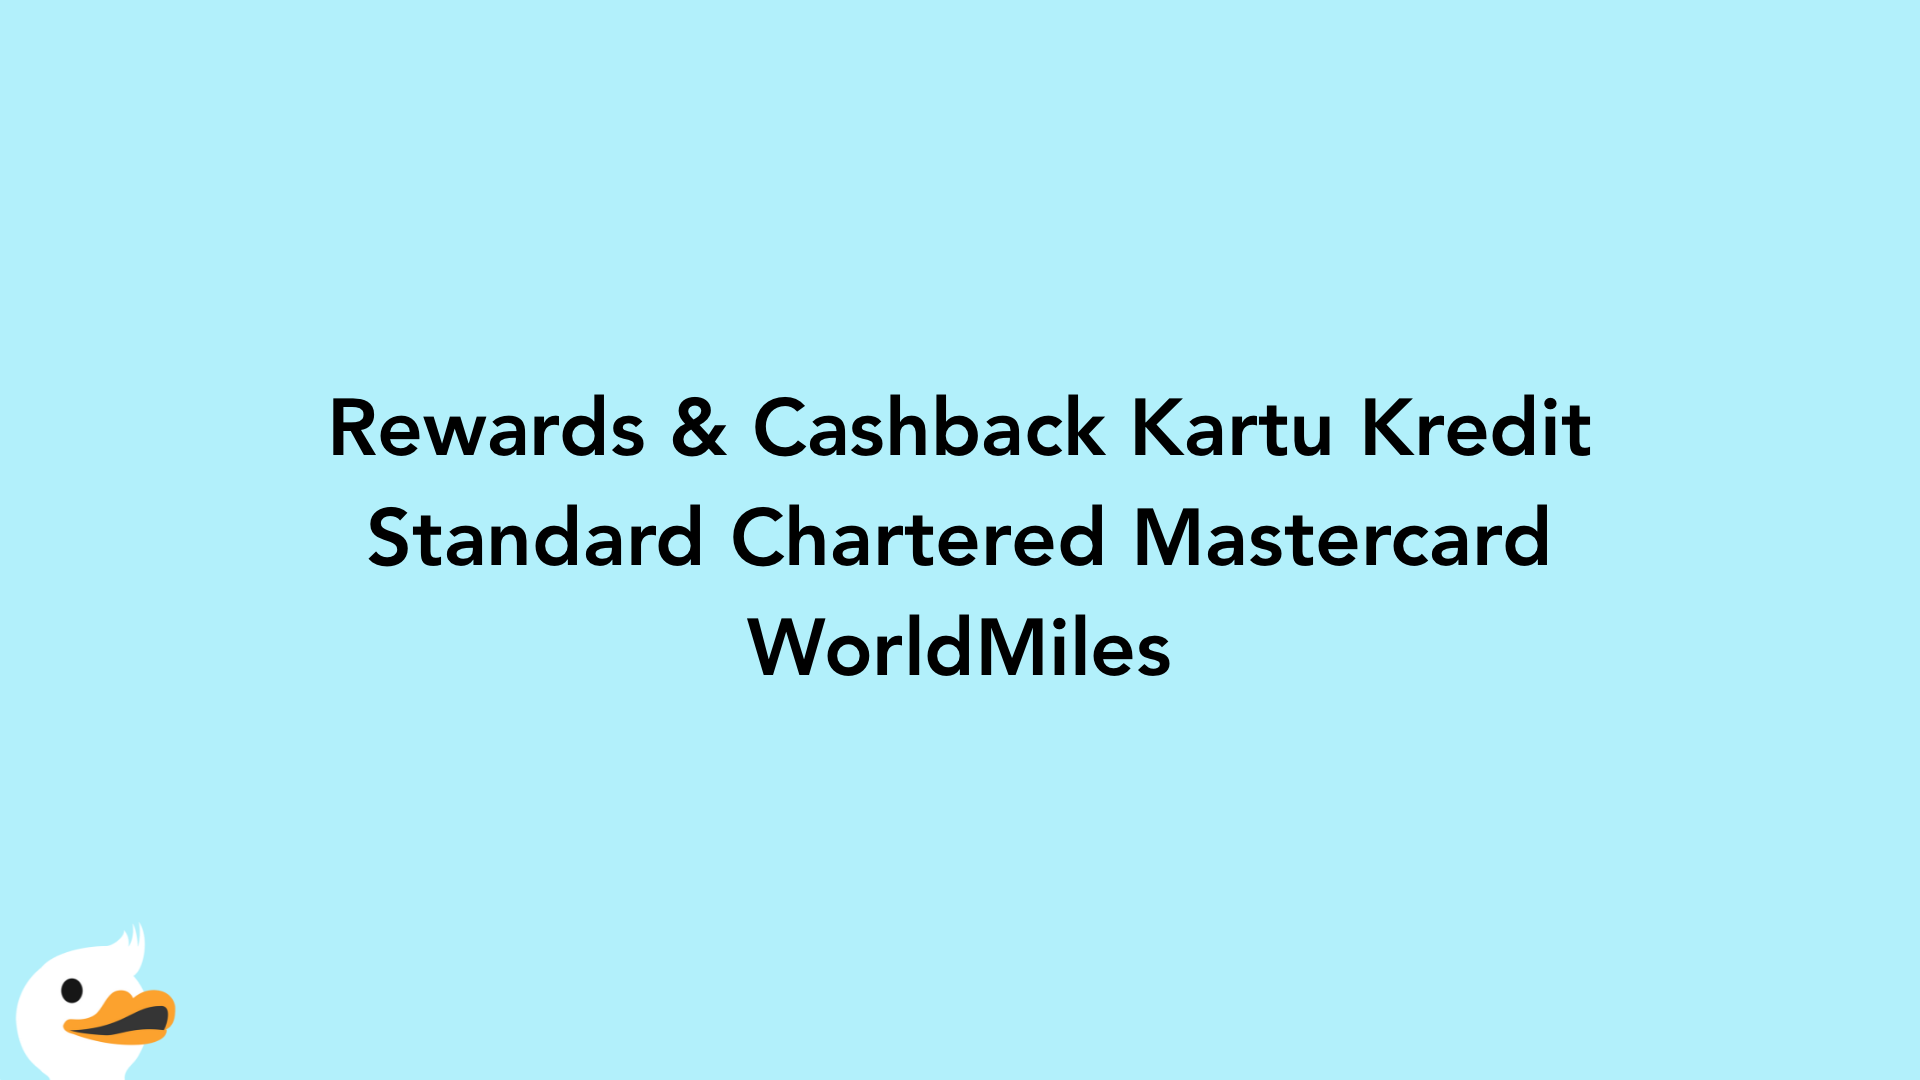 Rewards & Cashback Kartu Kredit Standard Chartered Mastercard WorldMiles